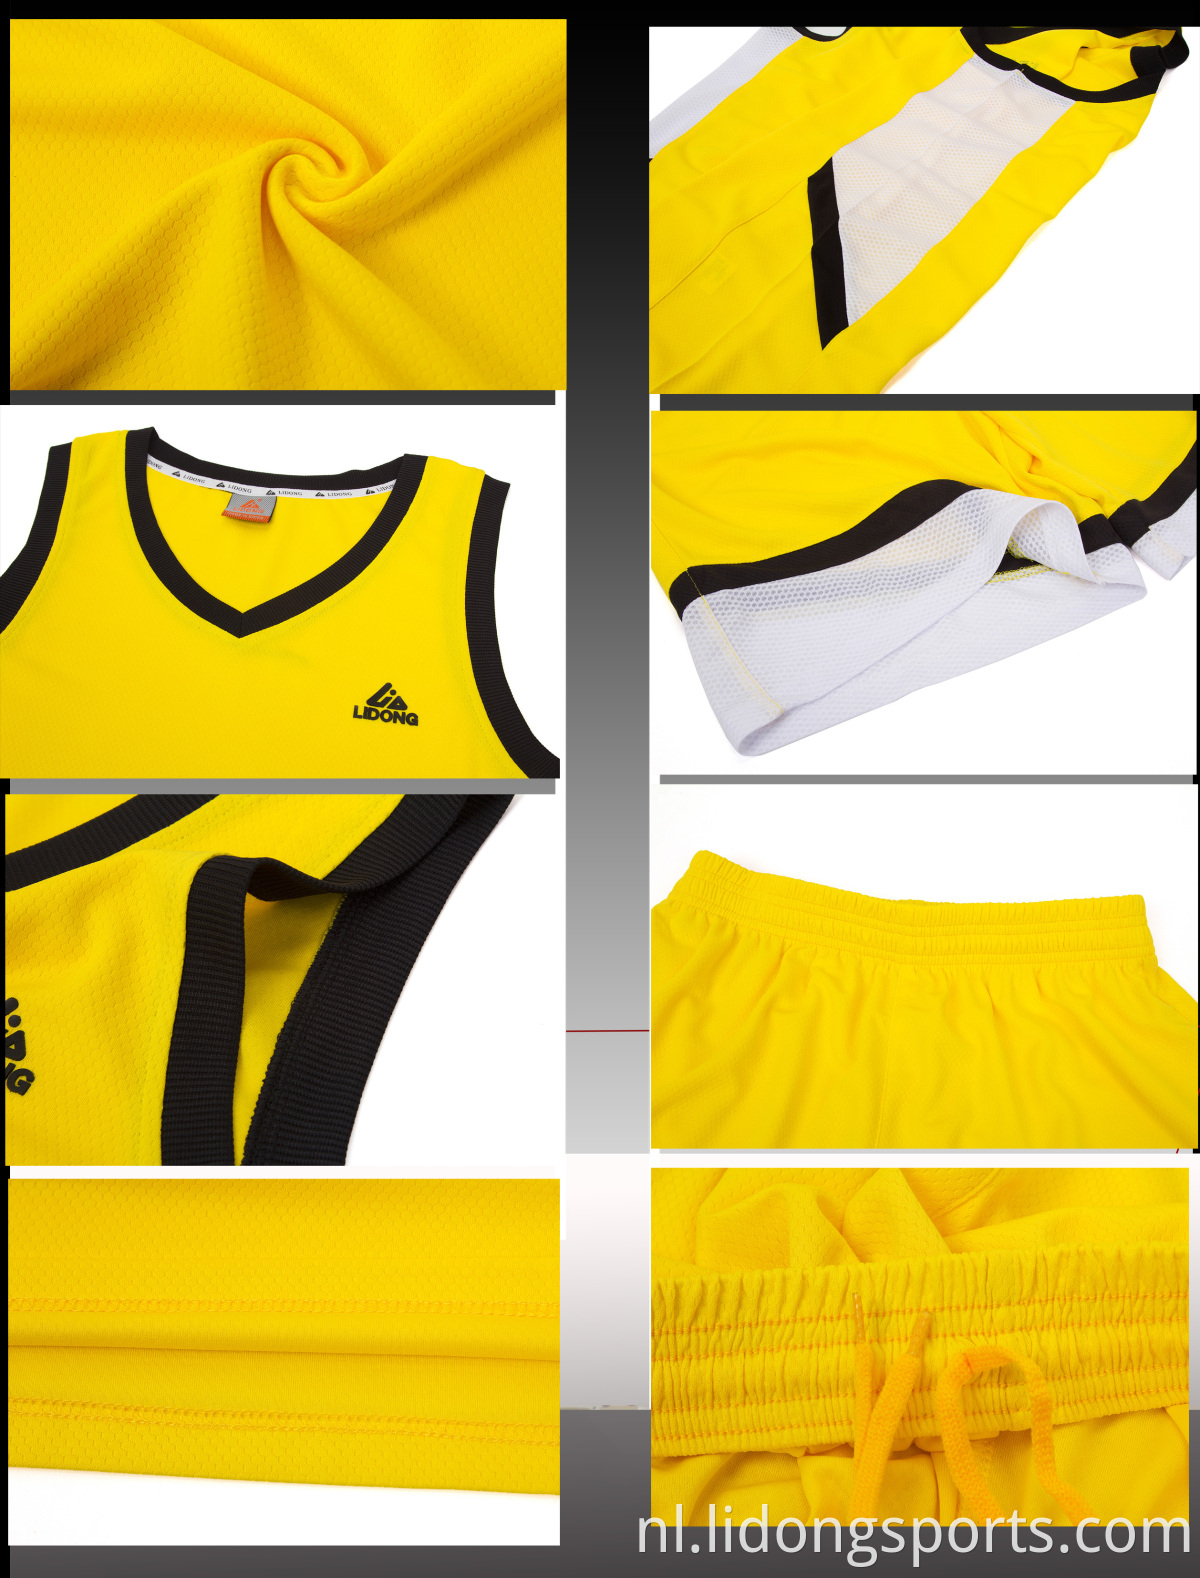 100%polyester basketbal jersey uniform aangepaste basketbal uniform groothandel jeugdbasketbaluniformen